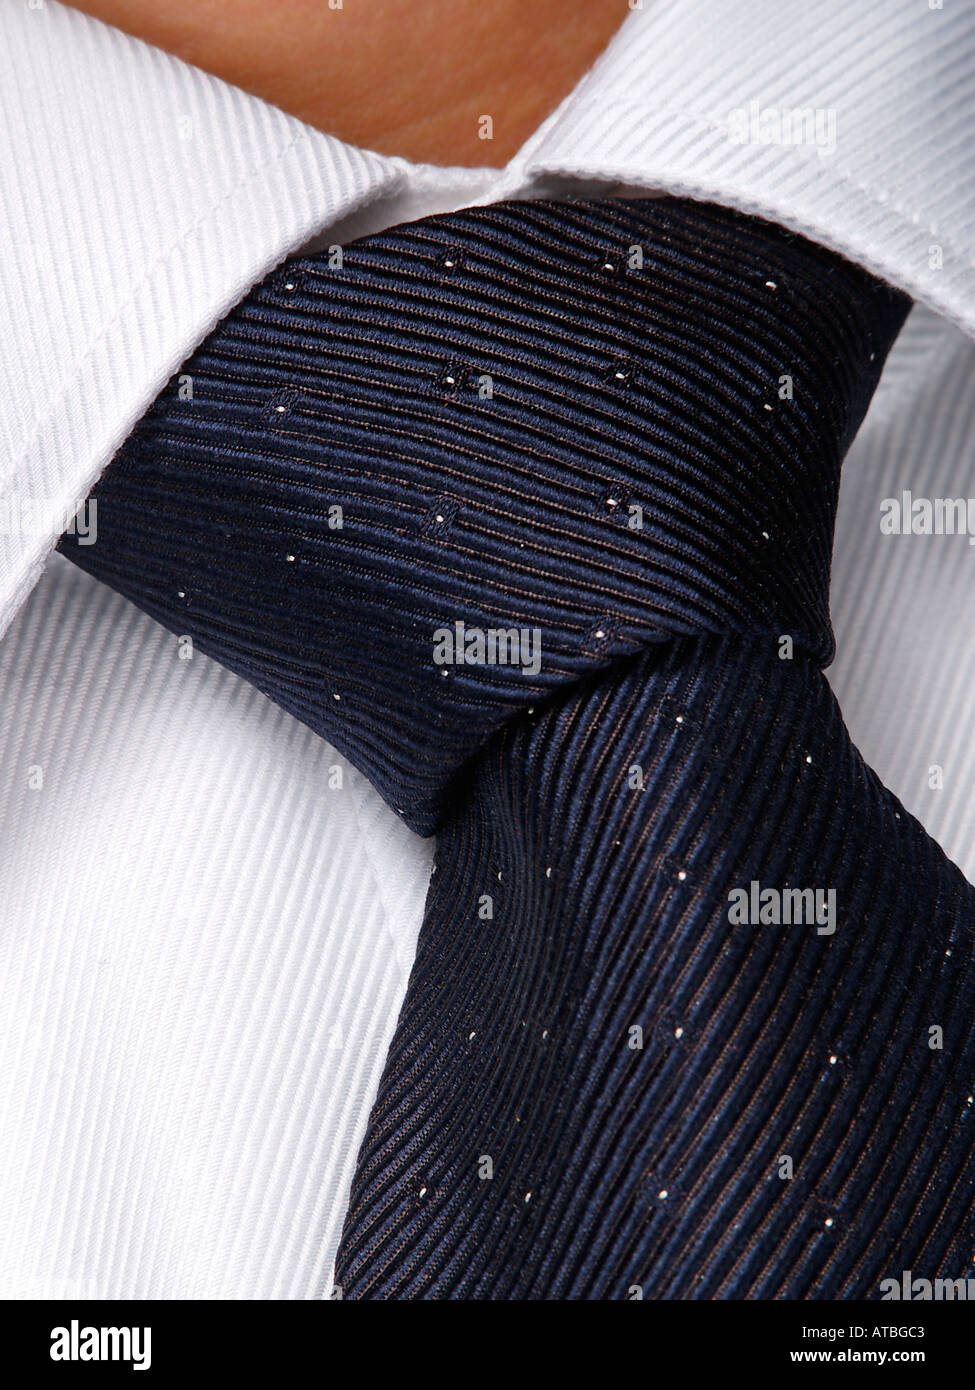 Closeup of tie knot on white shirt part of the businessmans uniform Stock  Photo - Alamy